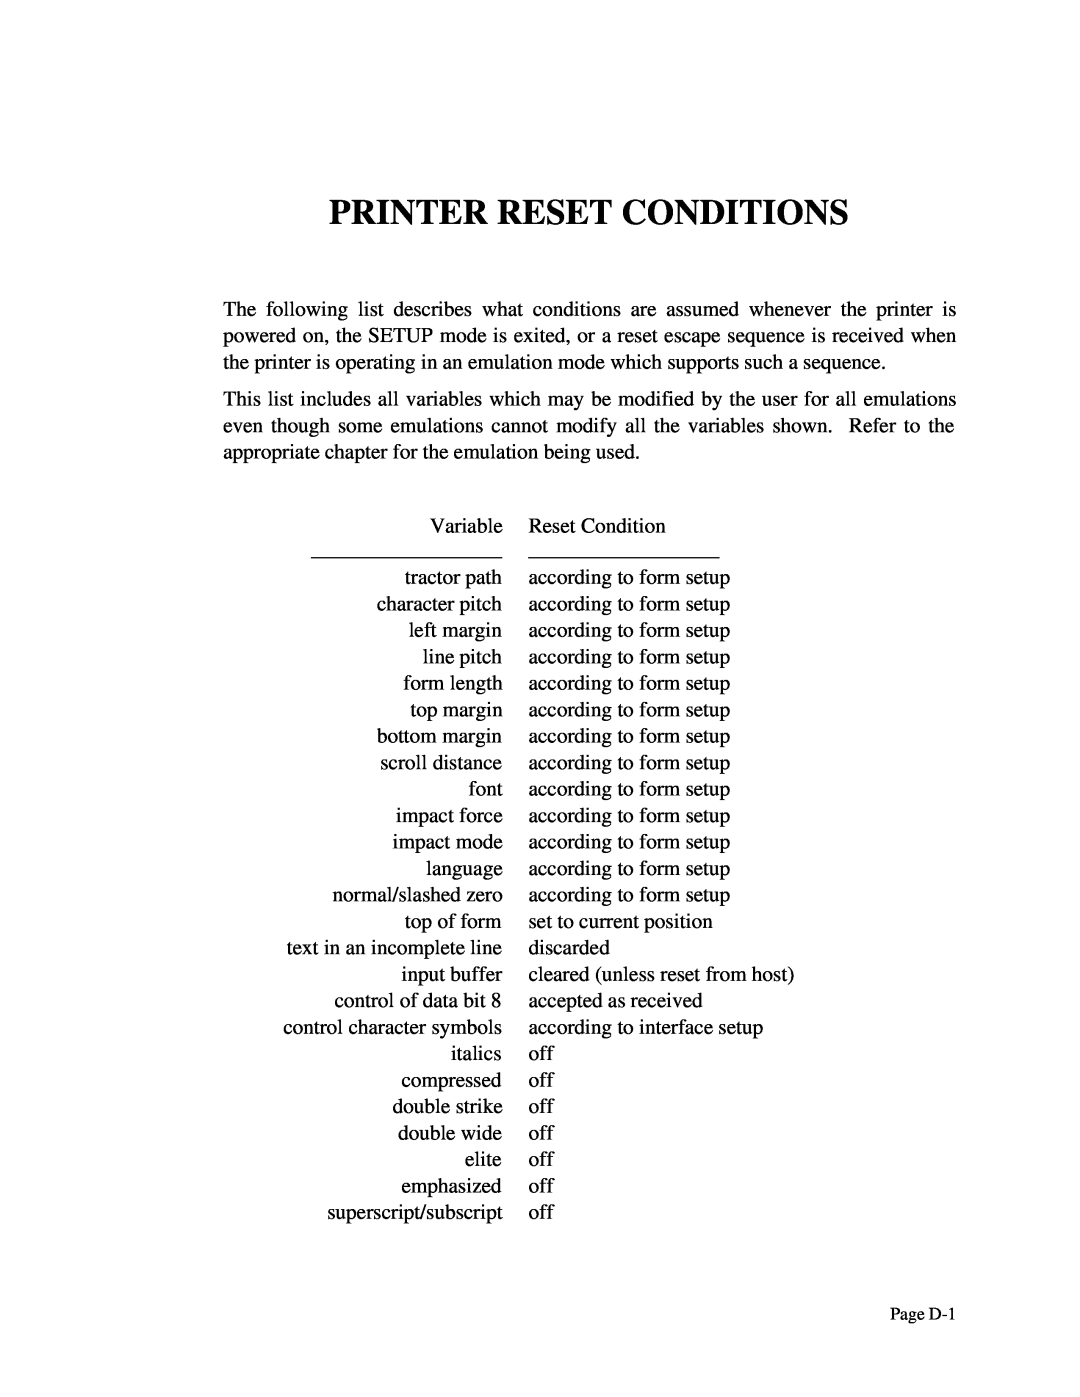 Printek 4300, 4503, 4500 manual Printer Reset Conditions, Page D-1 